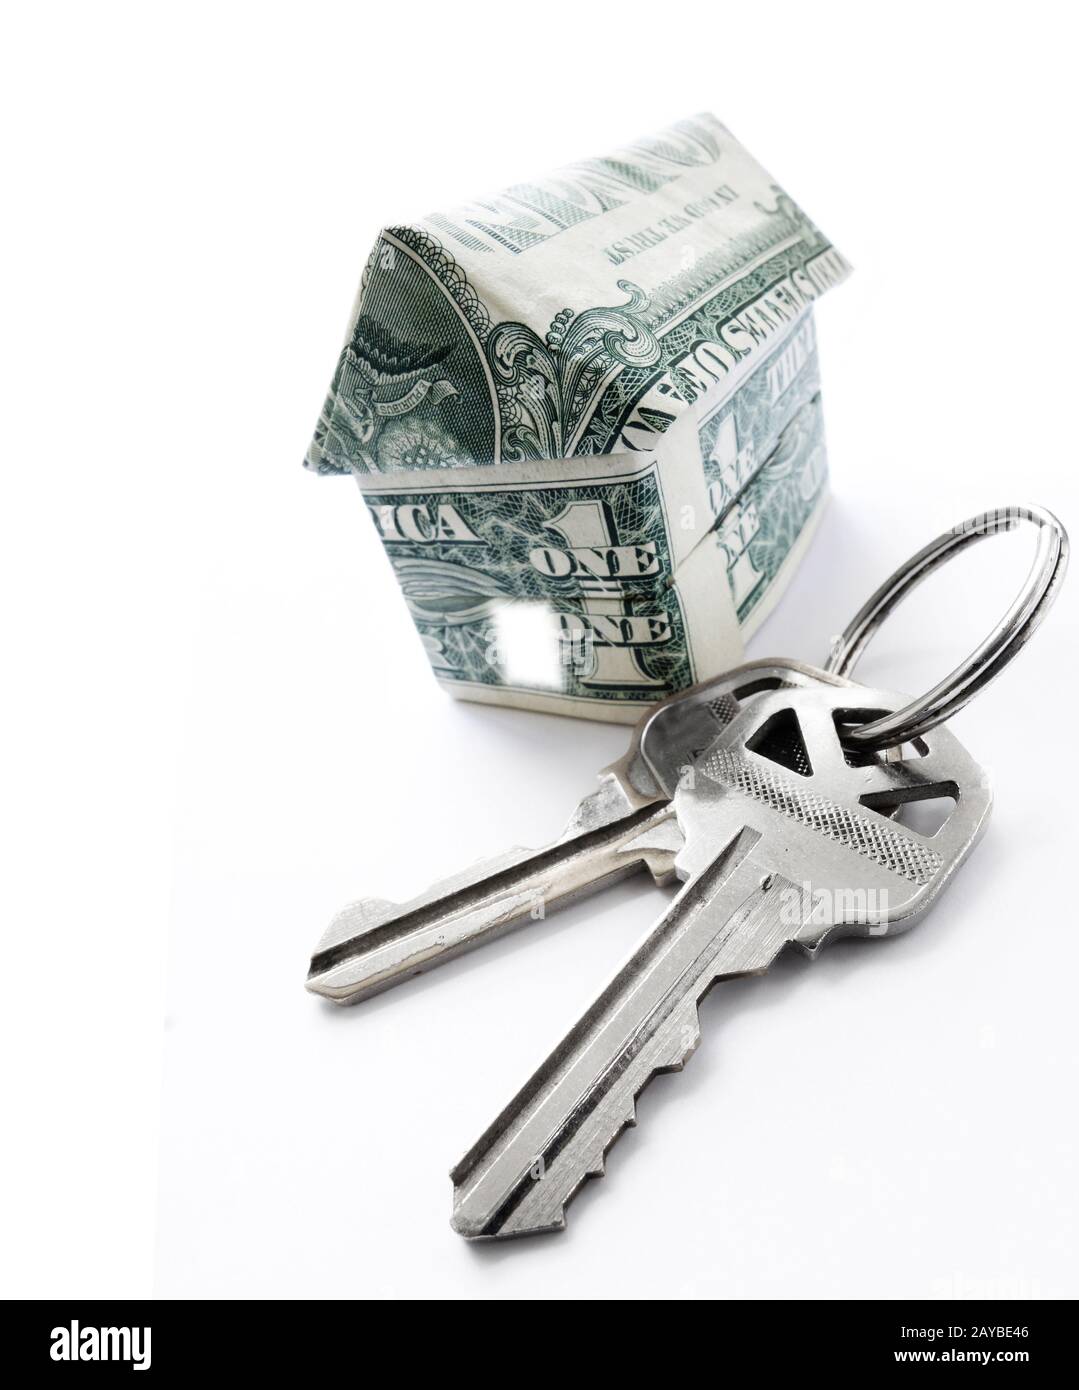 Home equity keys Stock Photo